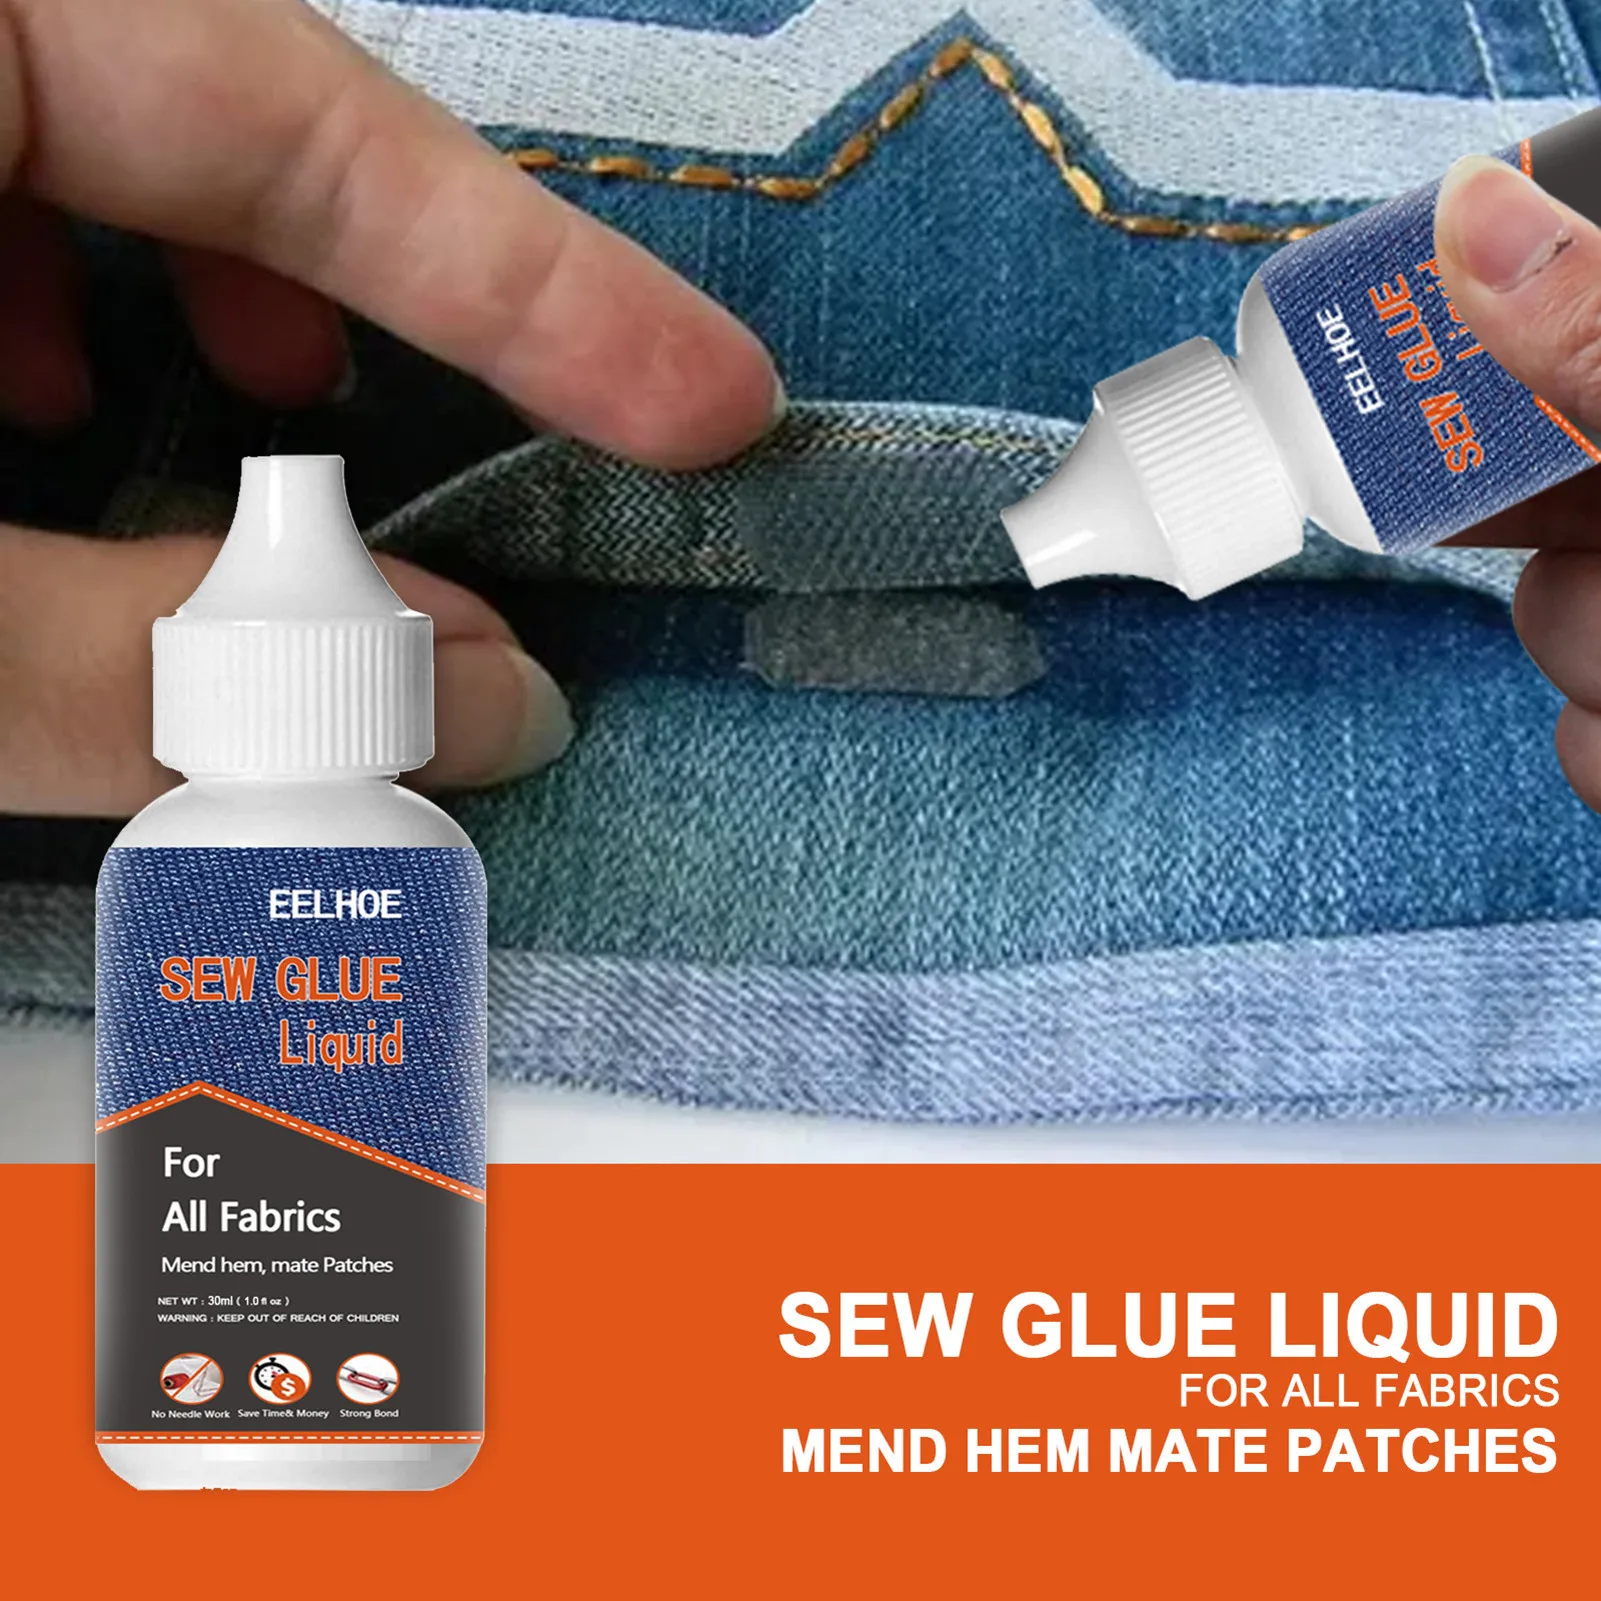 Leather Repair Glue, Powerful Waterproof Washing Glue For